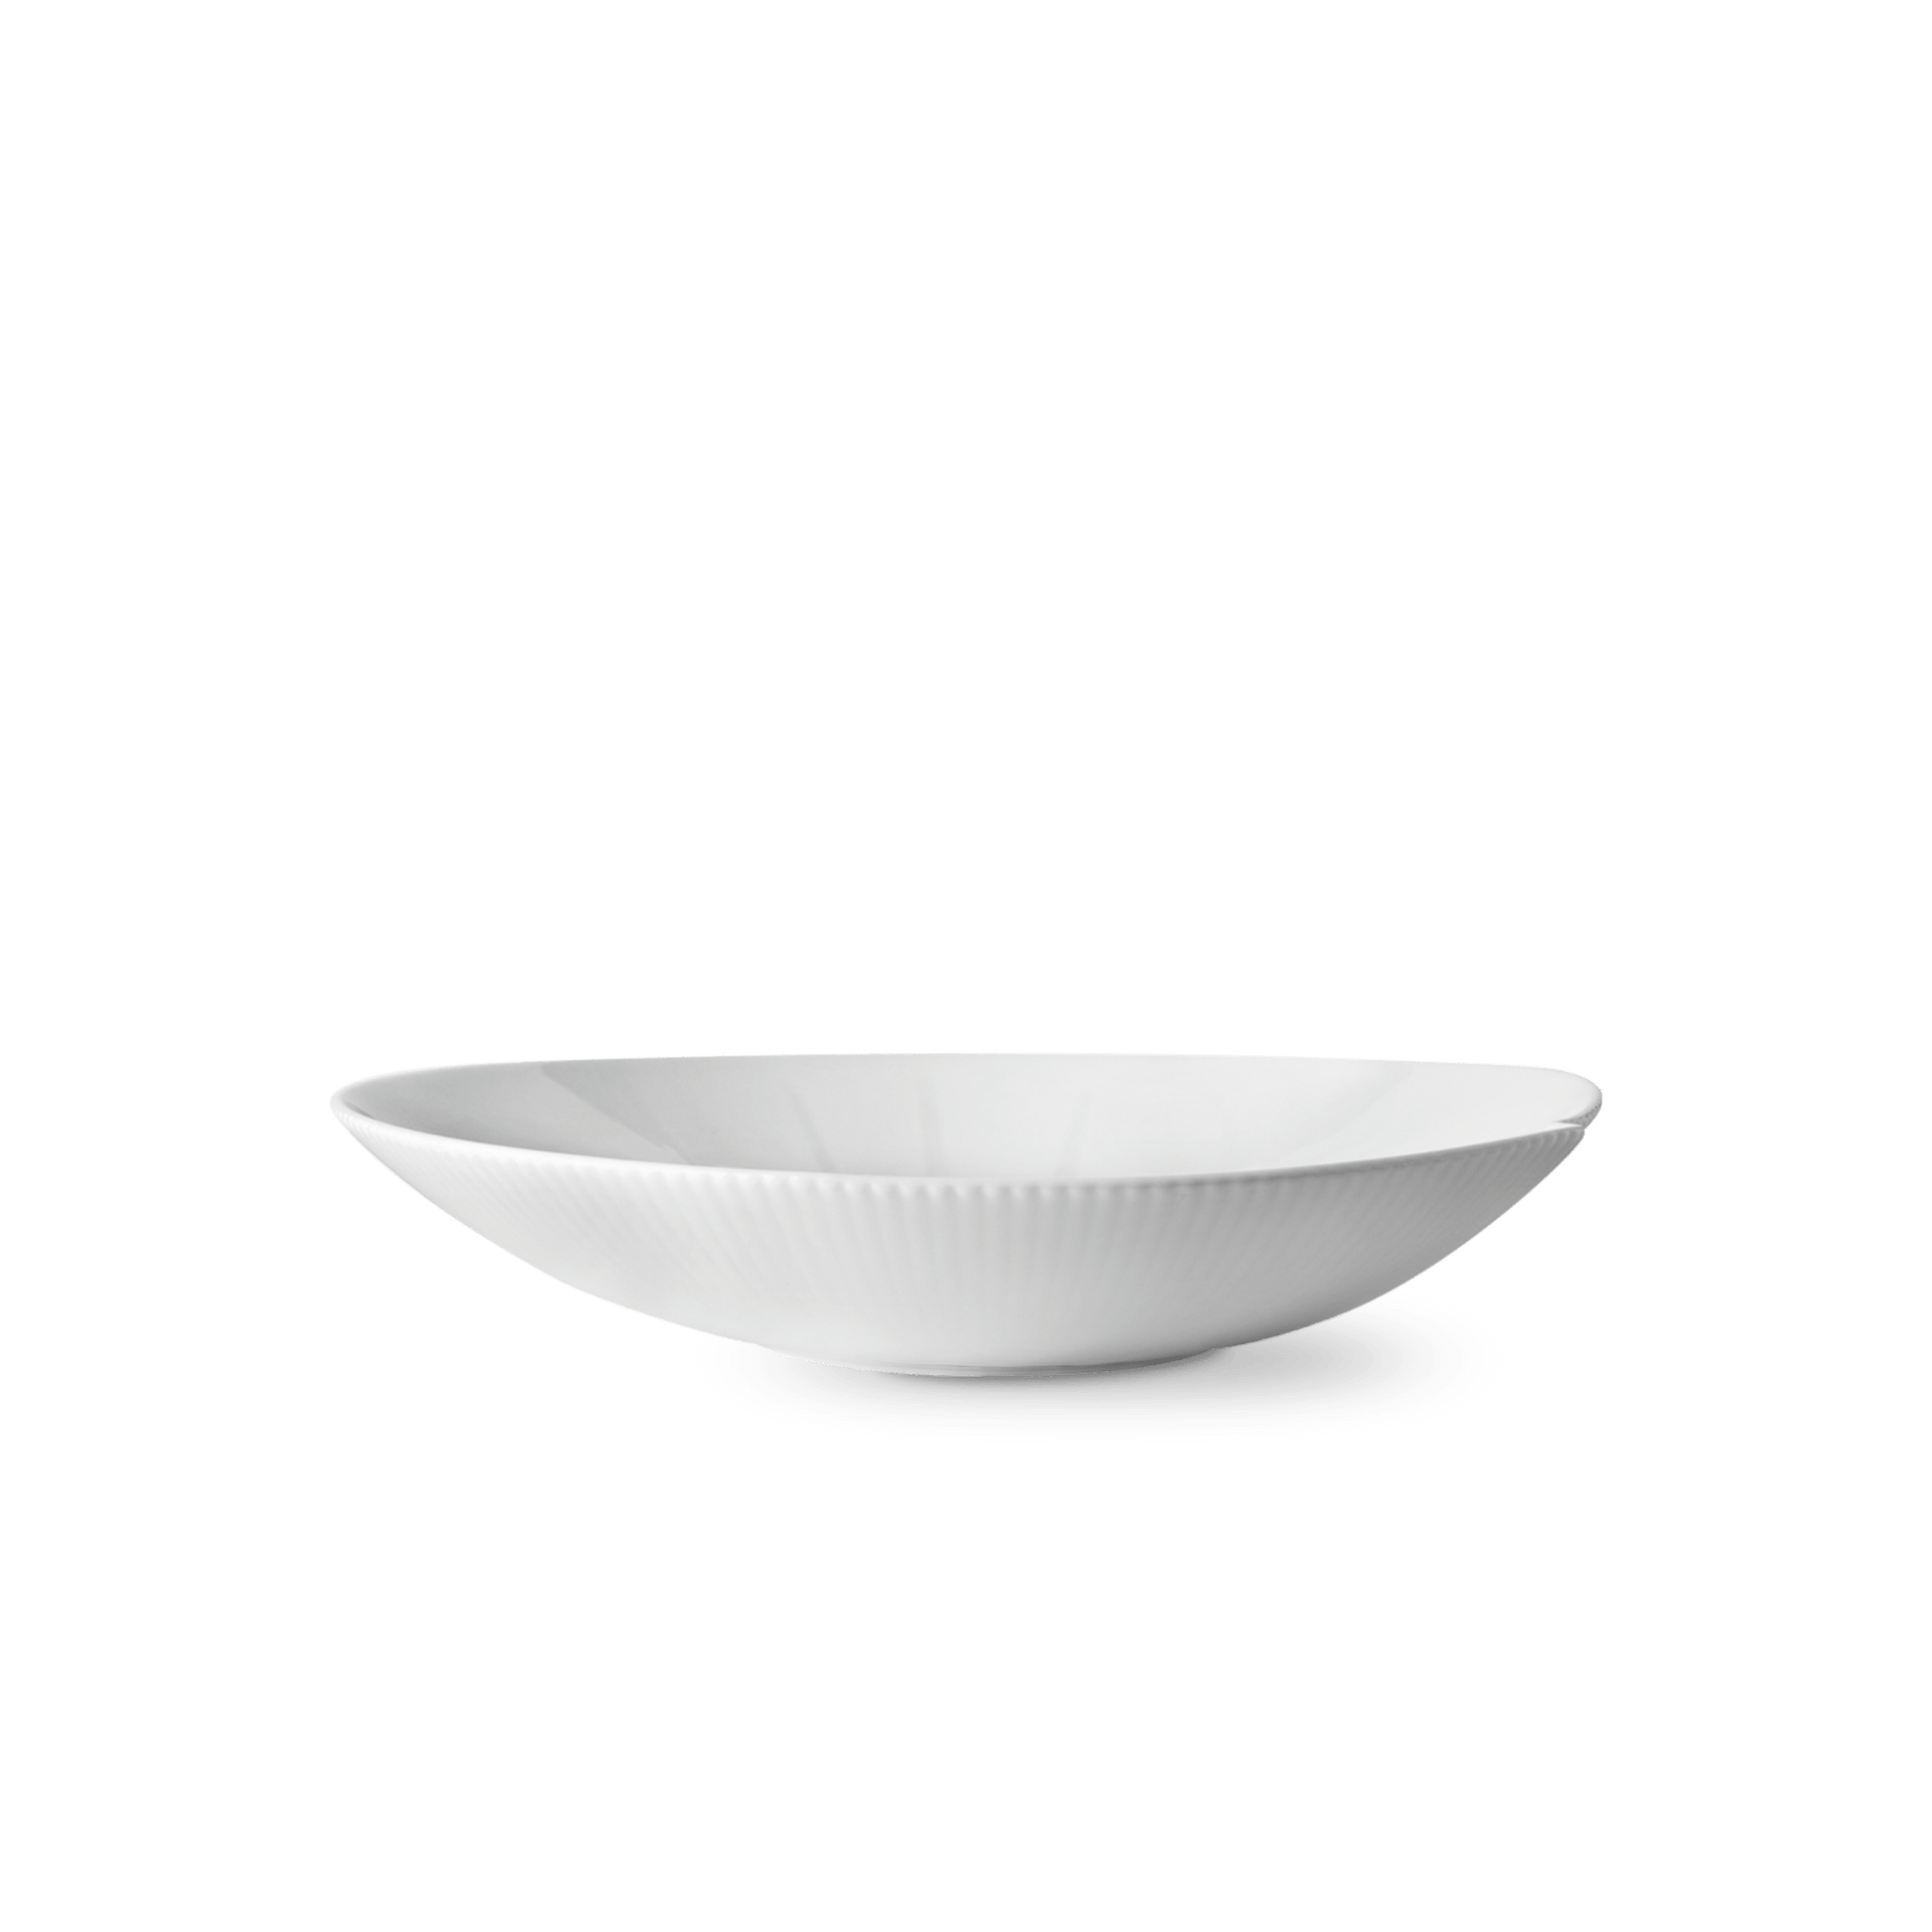 Pillivuyt Shop Bowl 10.25" diam x 2" H - Set of 4 Canopee Shallow Bowls, Set of 4